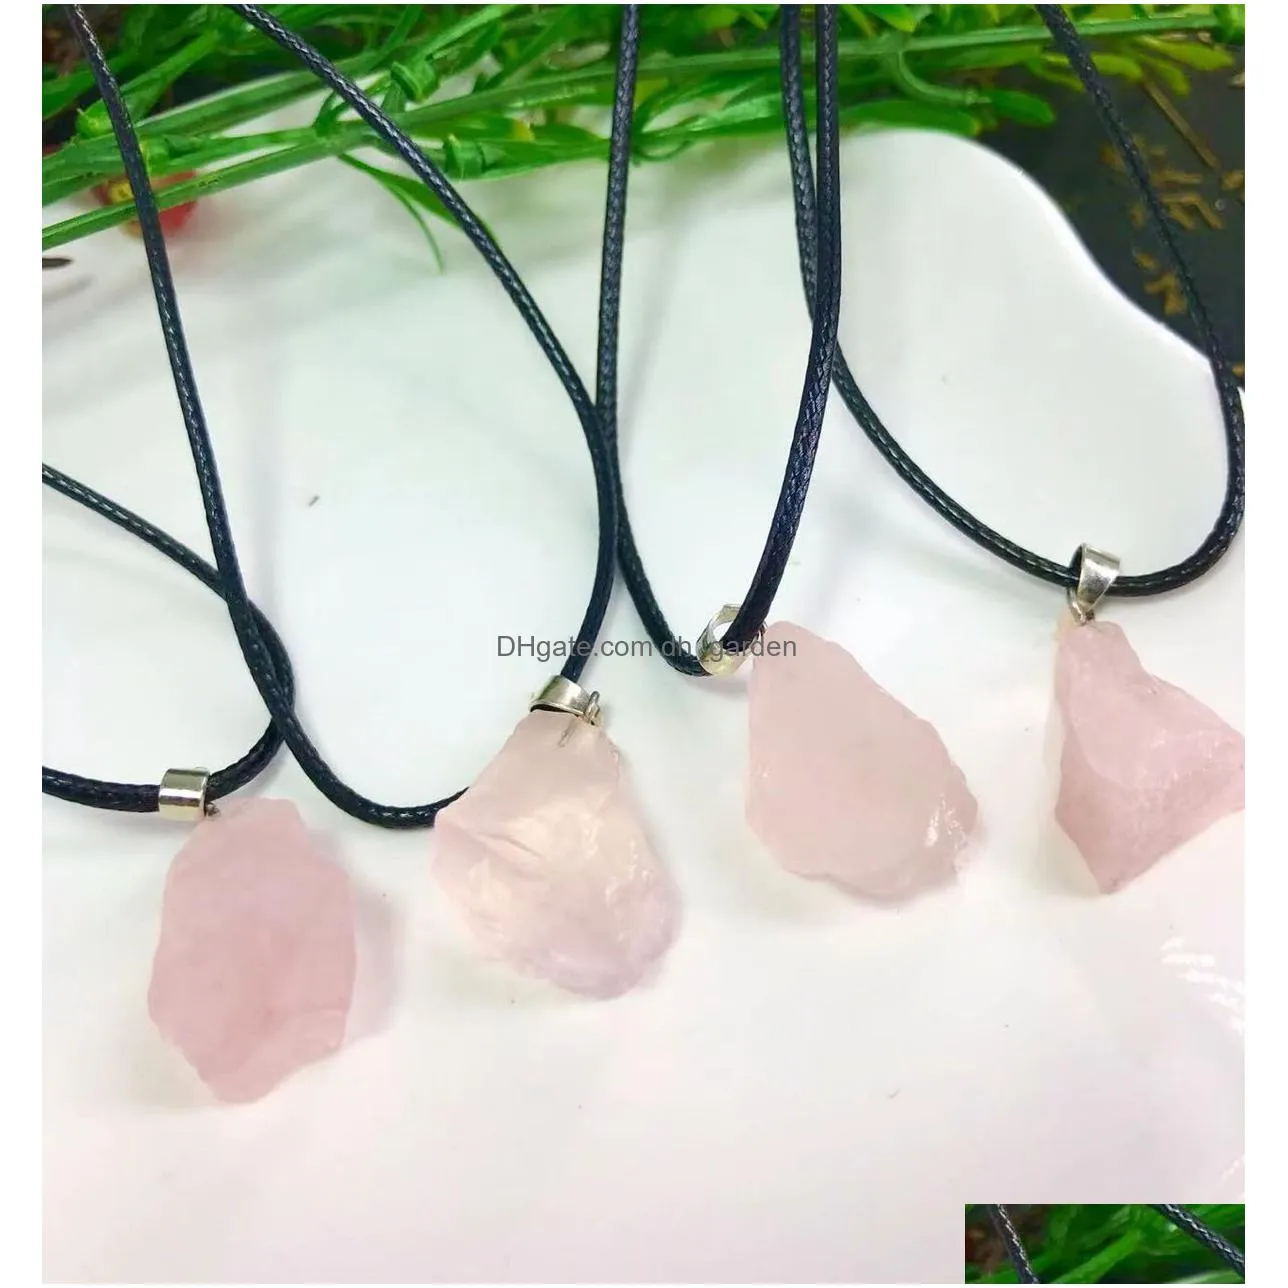 natural irregular pink rough stone necklaces healing rose quartz crystal gemstone pendant necklace women jewelry